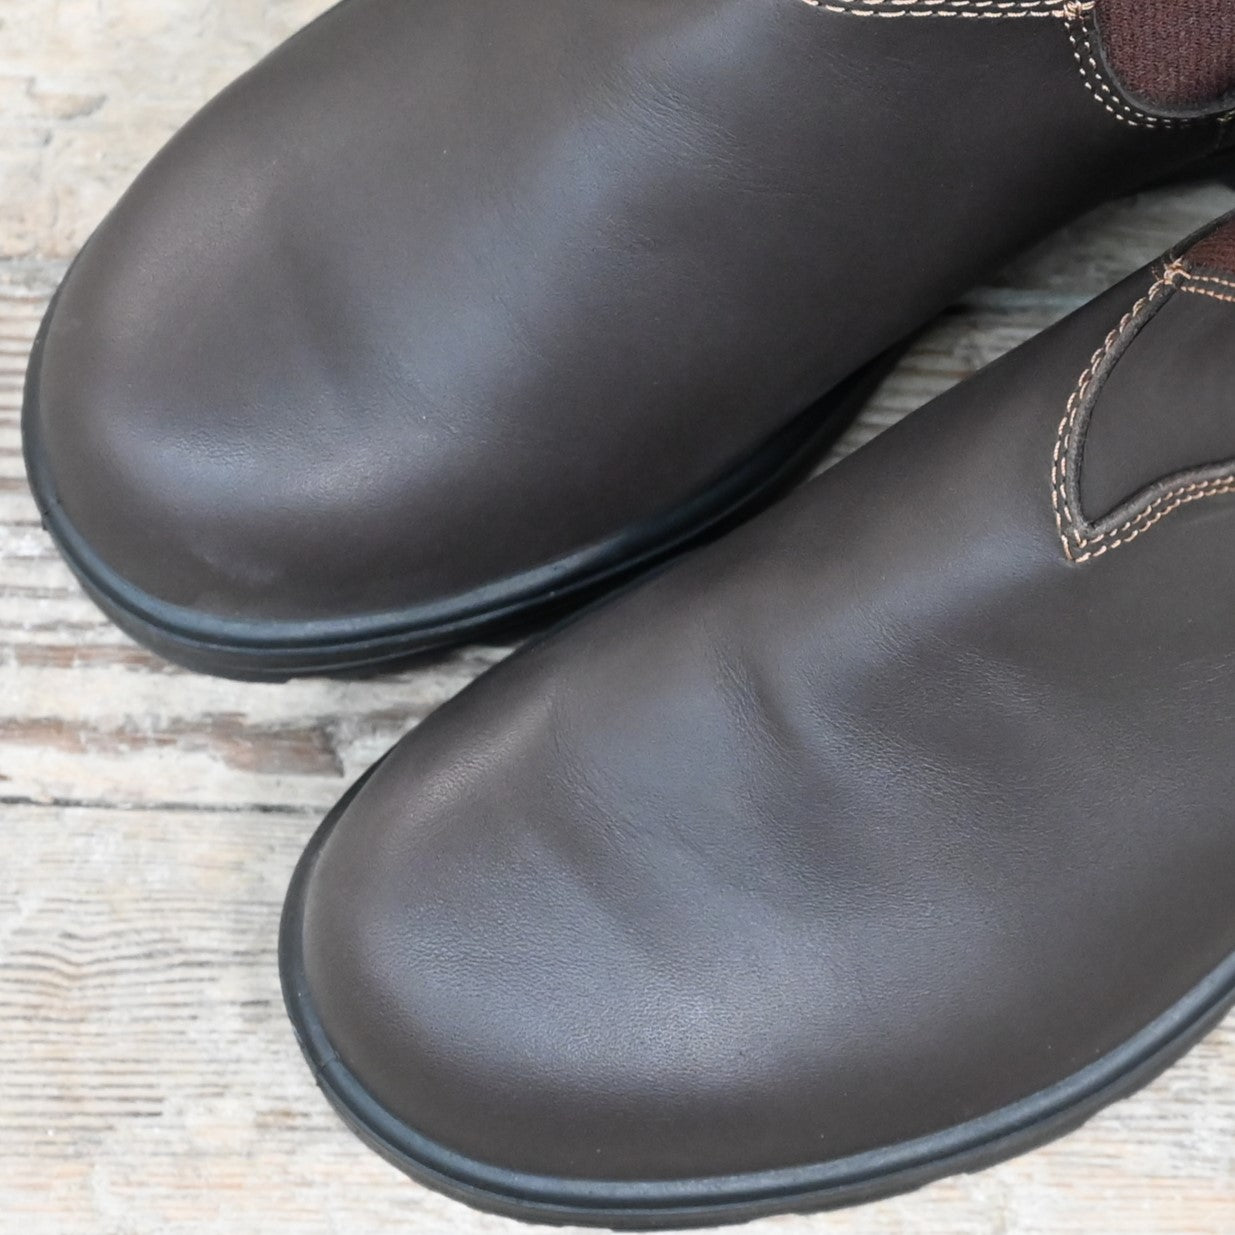 Blundstone Slip On In Walnut Premium Leather view of toe